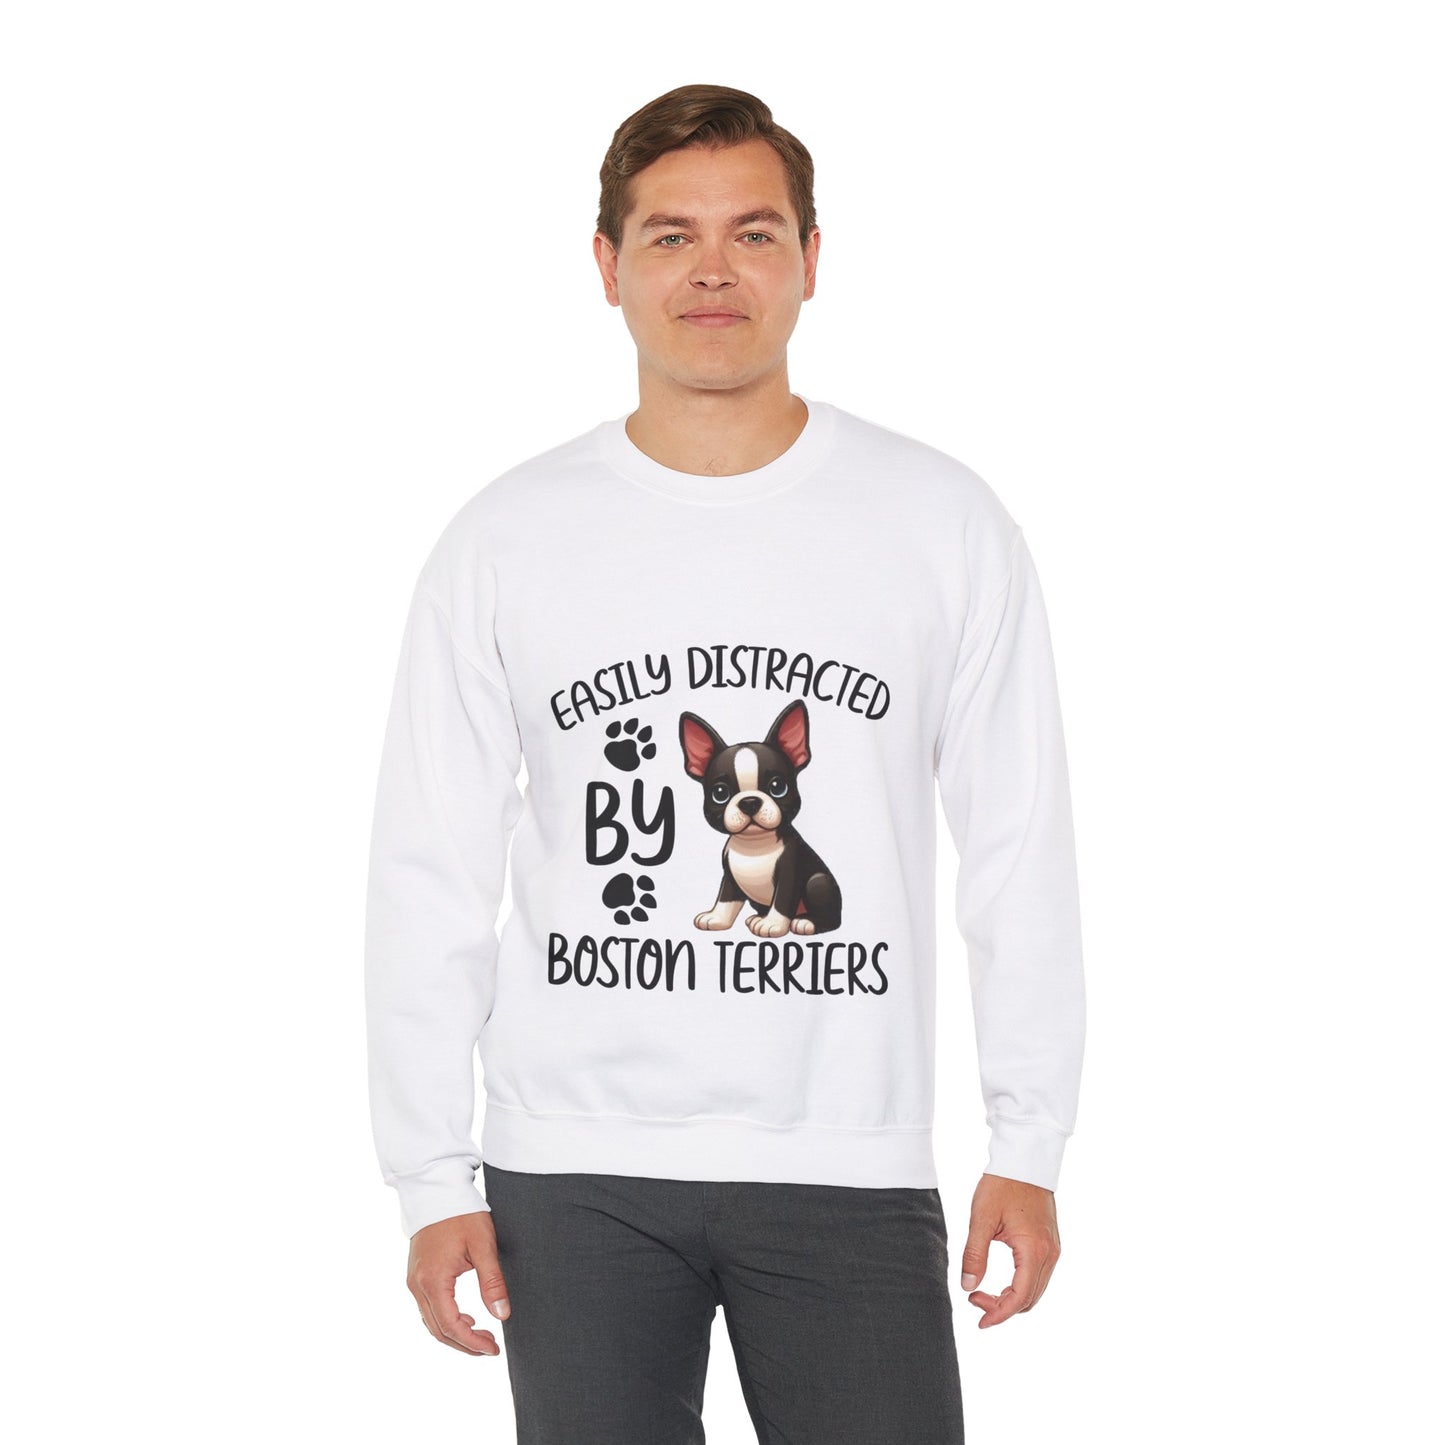 Buddy  - Unisex Sweatshirt for Boston Terrier lovers